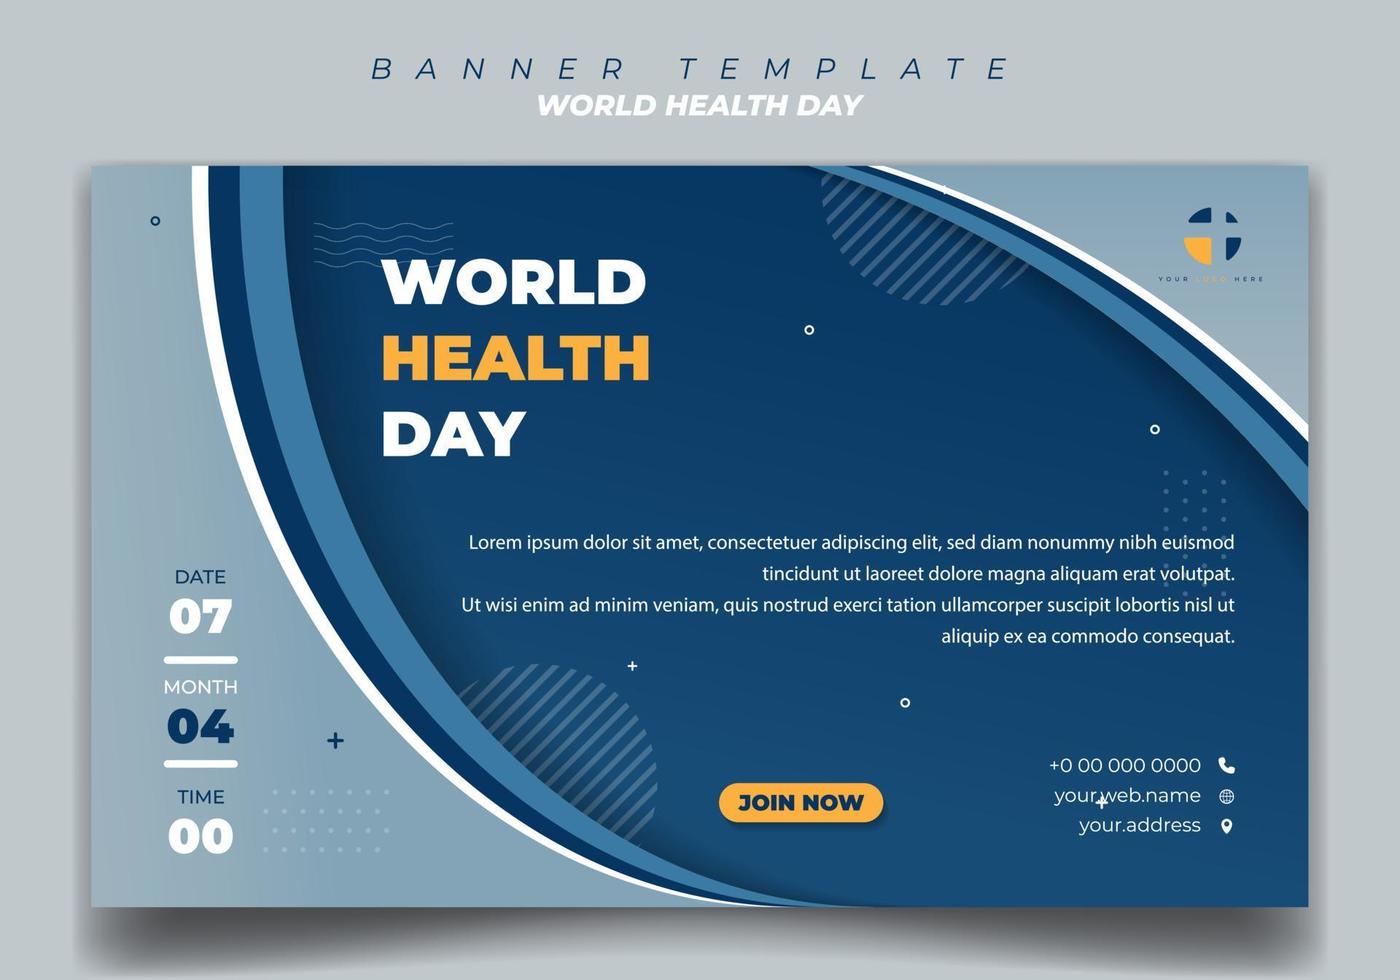 World Health Day template for social media banner design with elegant blue background. vector